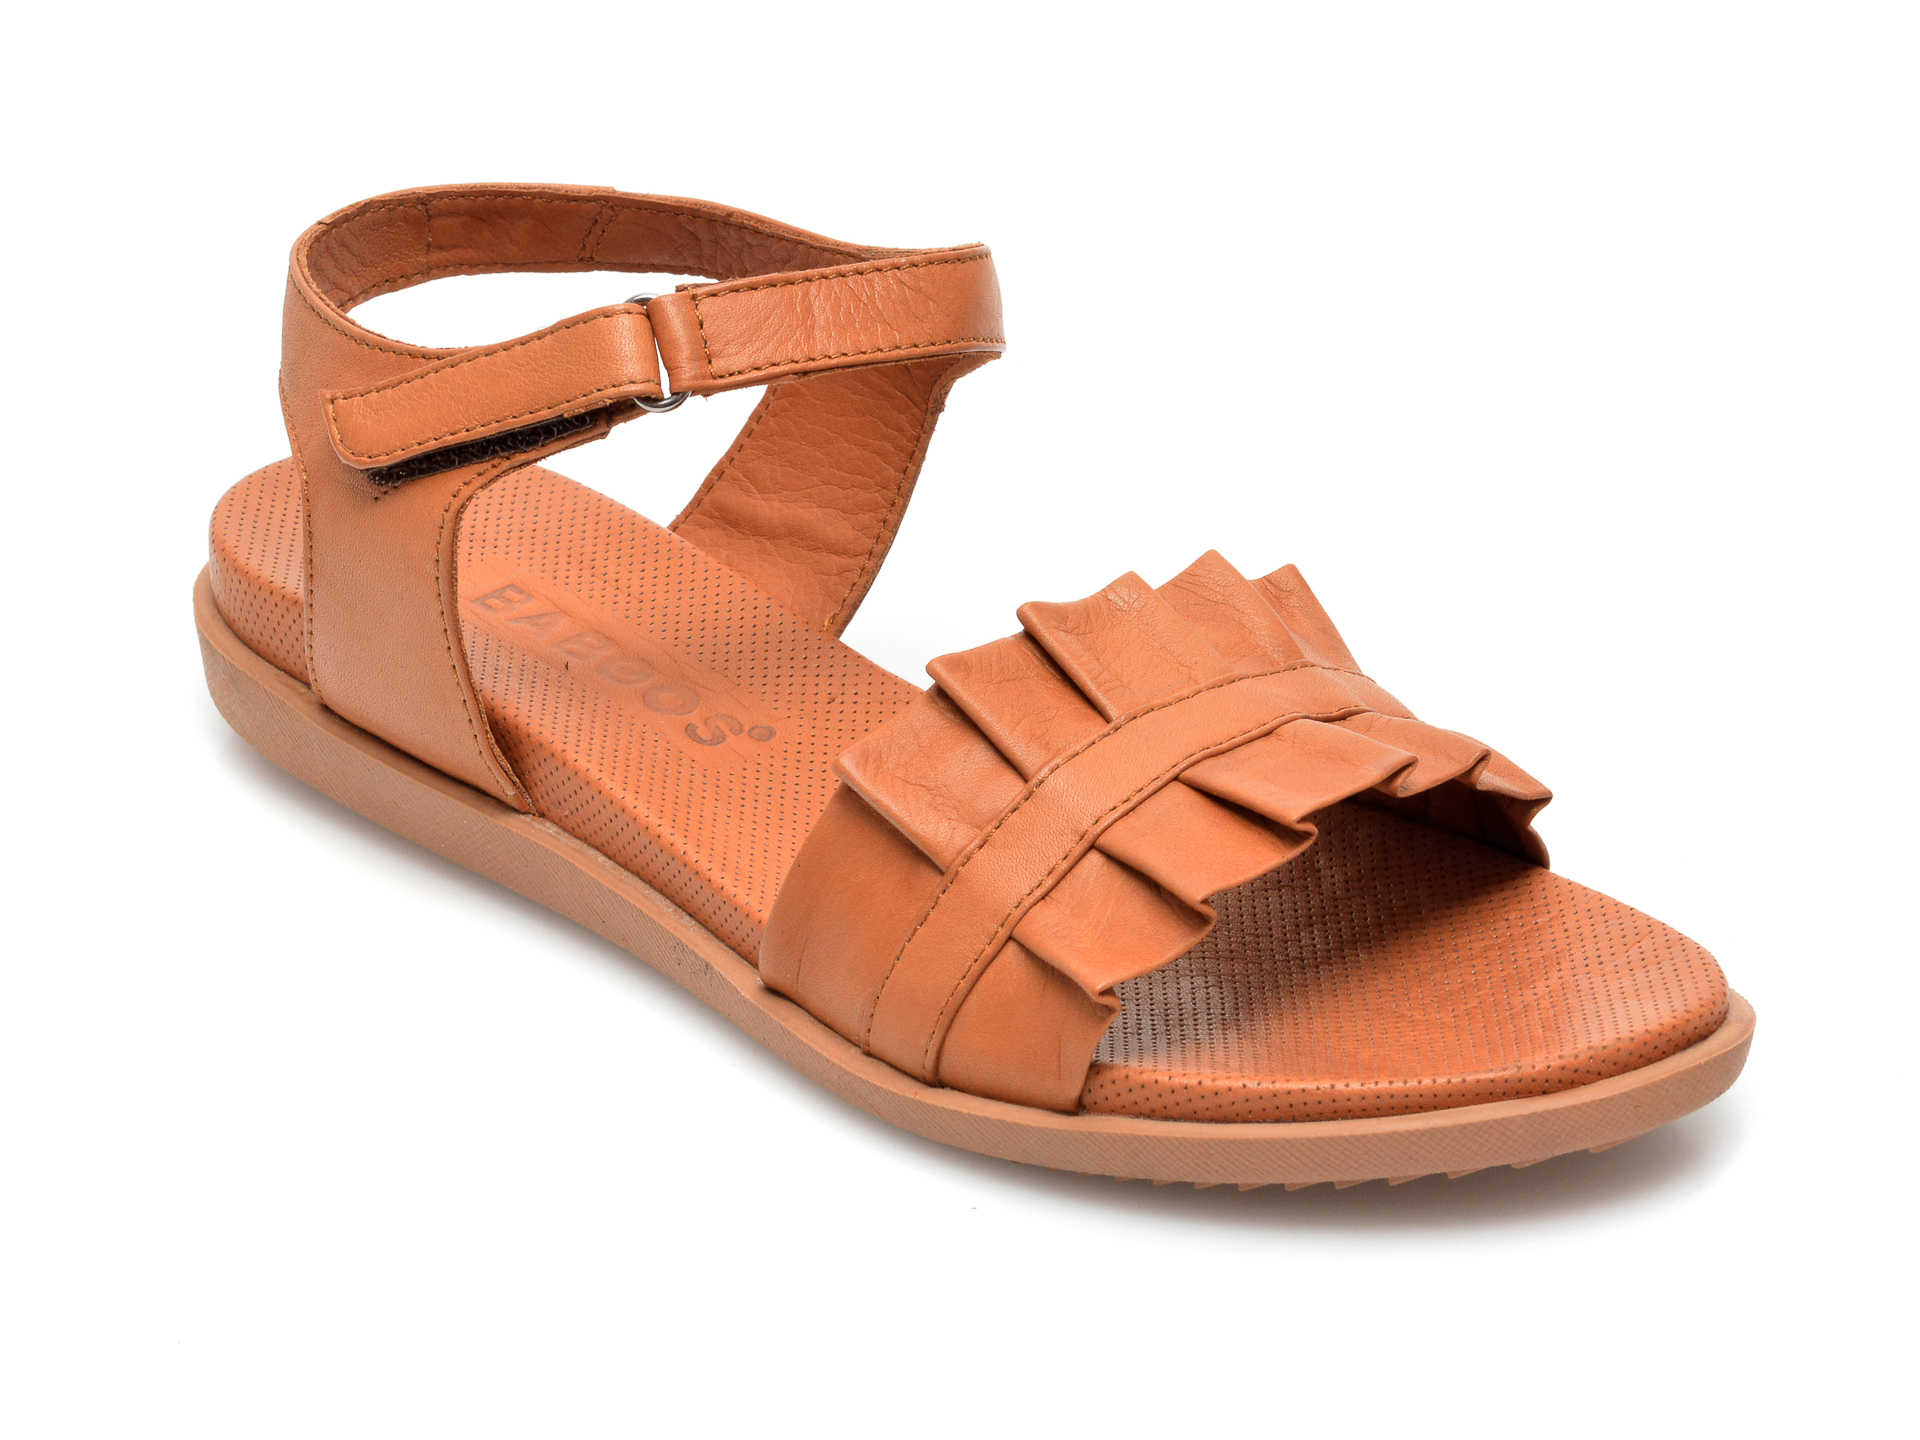 Sandale BABOOS maro, 1403, din piele naturala